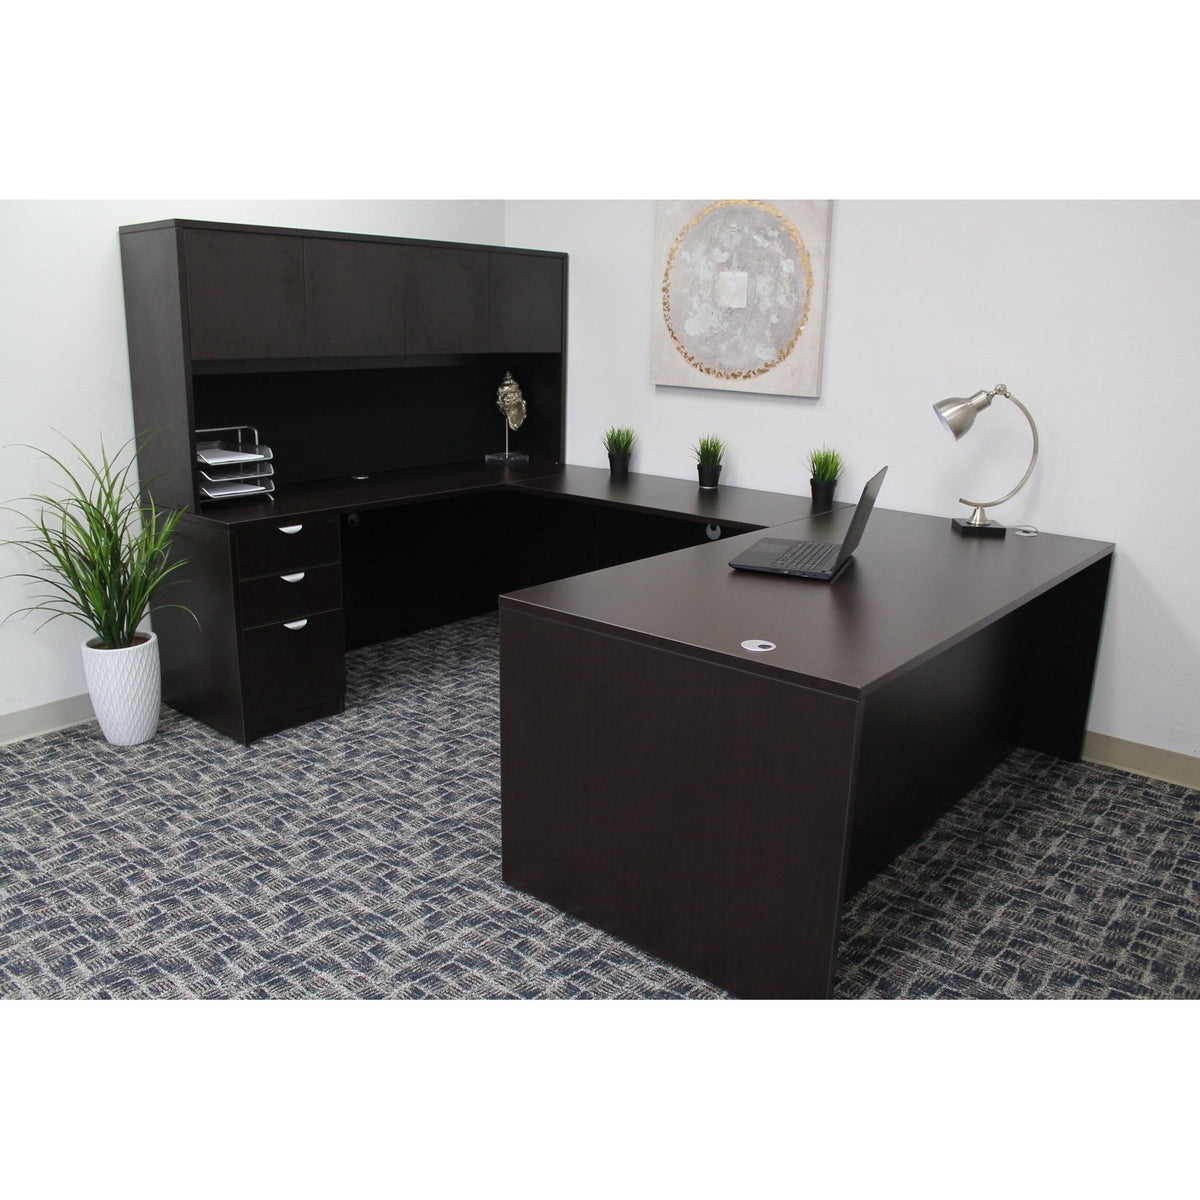 Boss Simple System Double L shaped Pedestal Office Desk